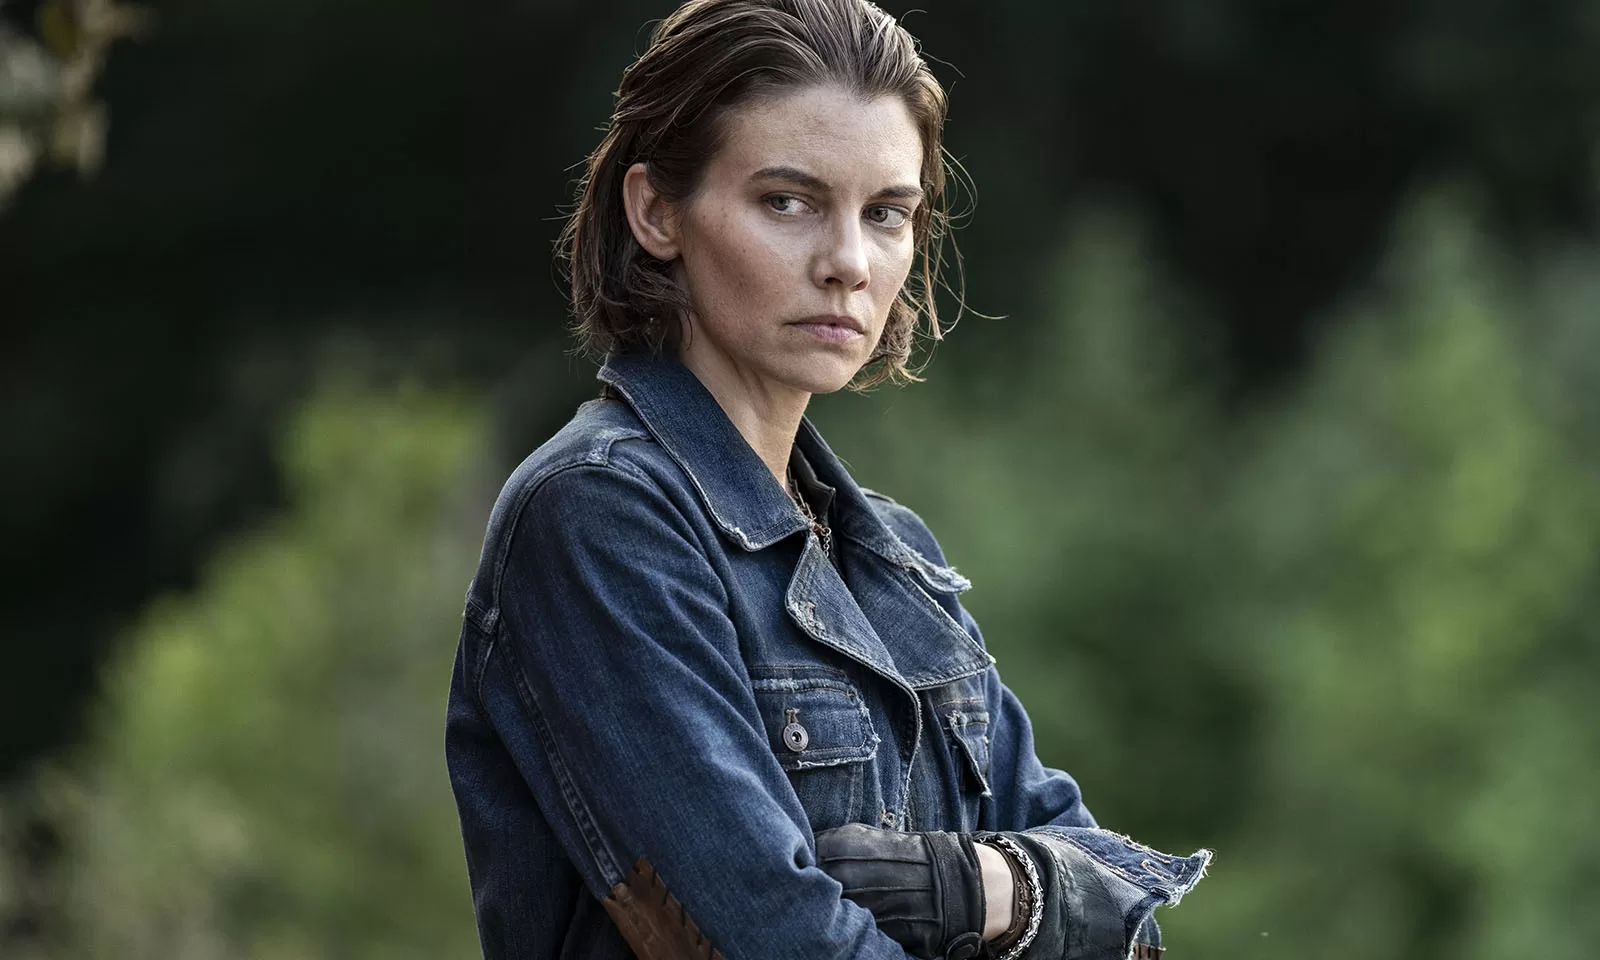 Maggie em cena do episódio 1 de The Walking Dead: Dead City.